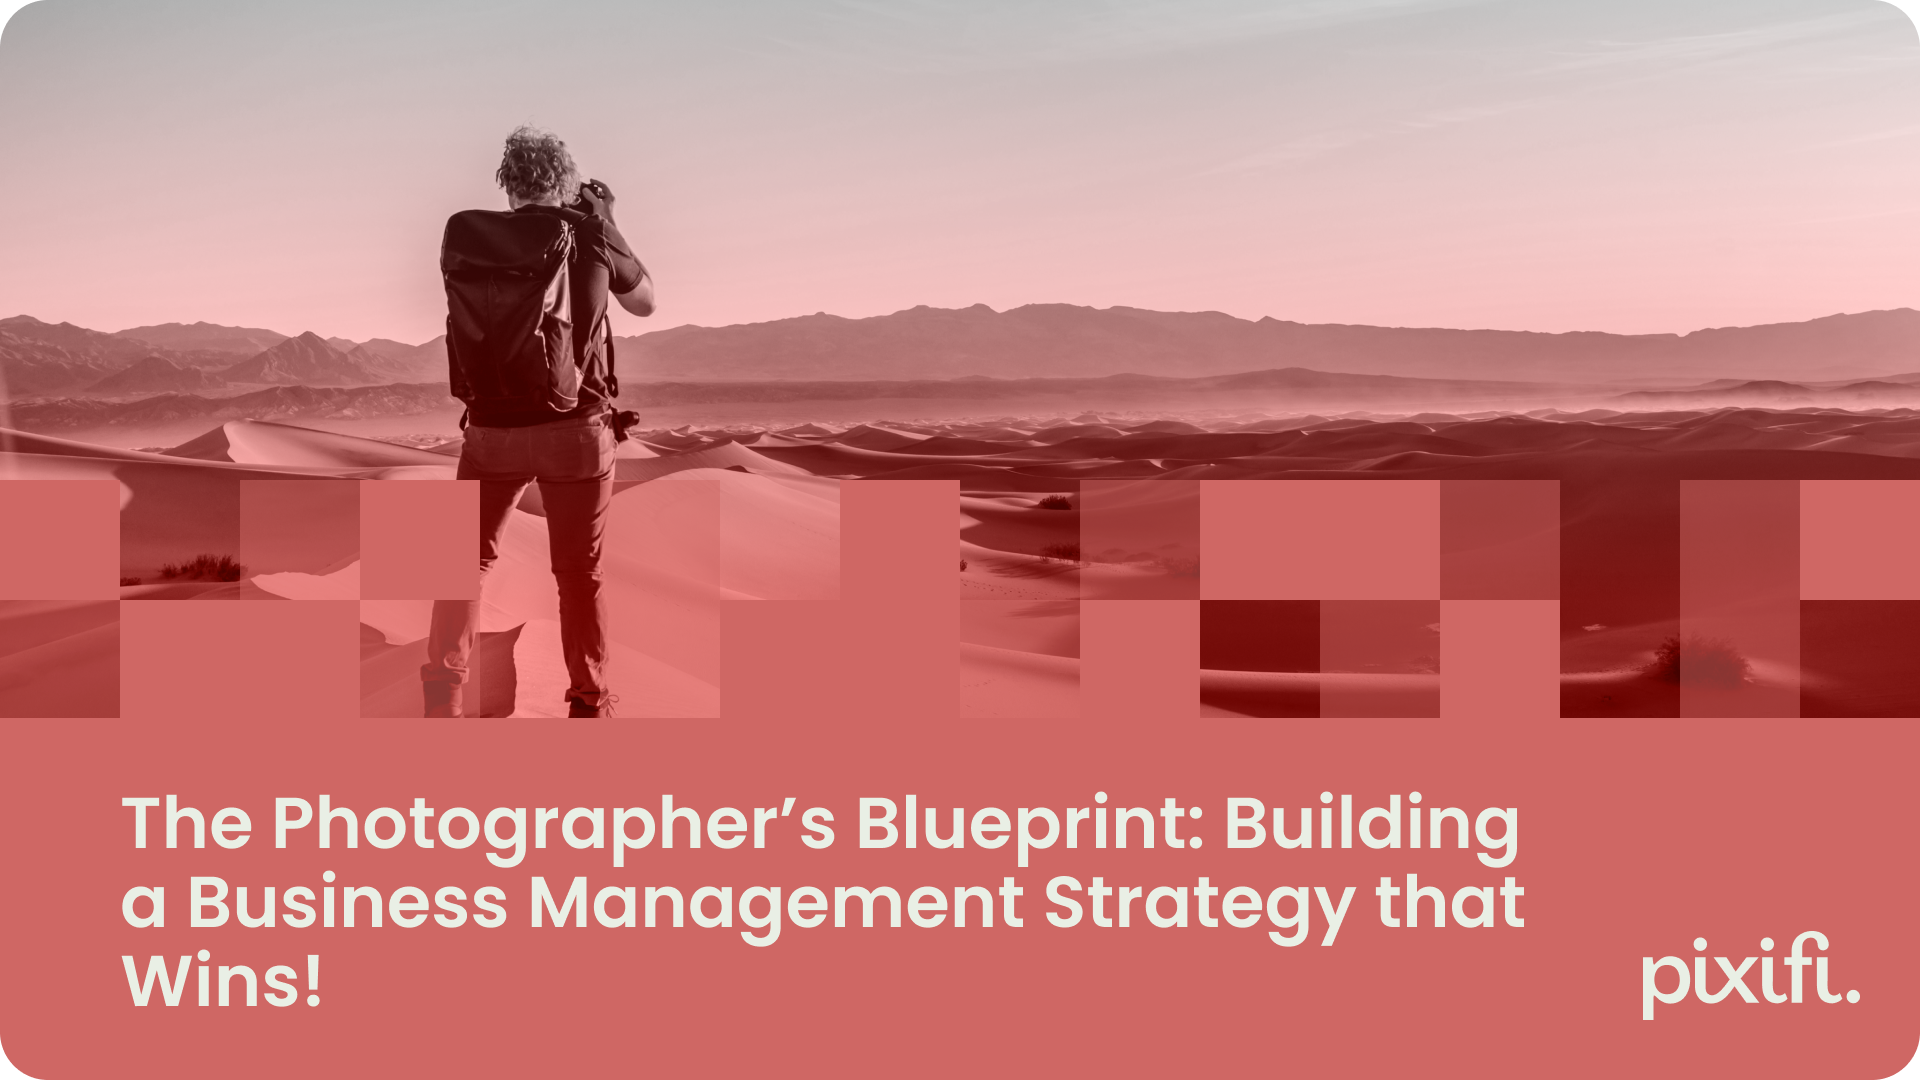 The Photographer’s Blueprint: Building a Business Management Strategy that Wins